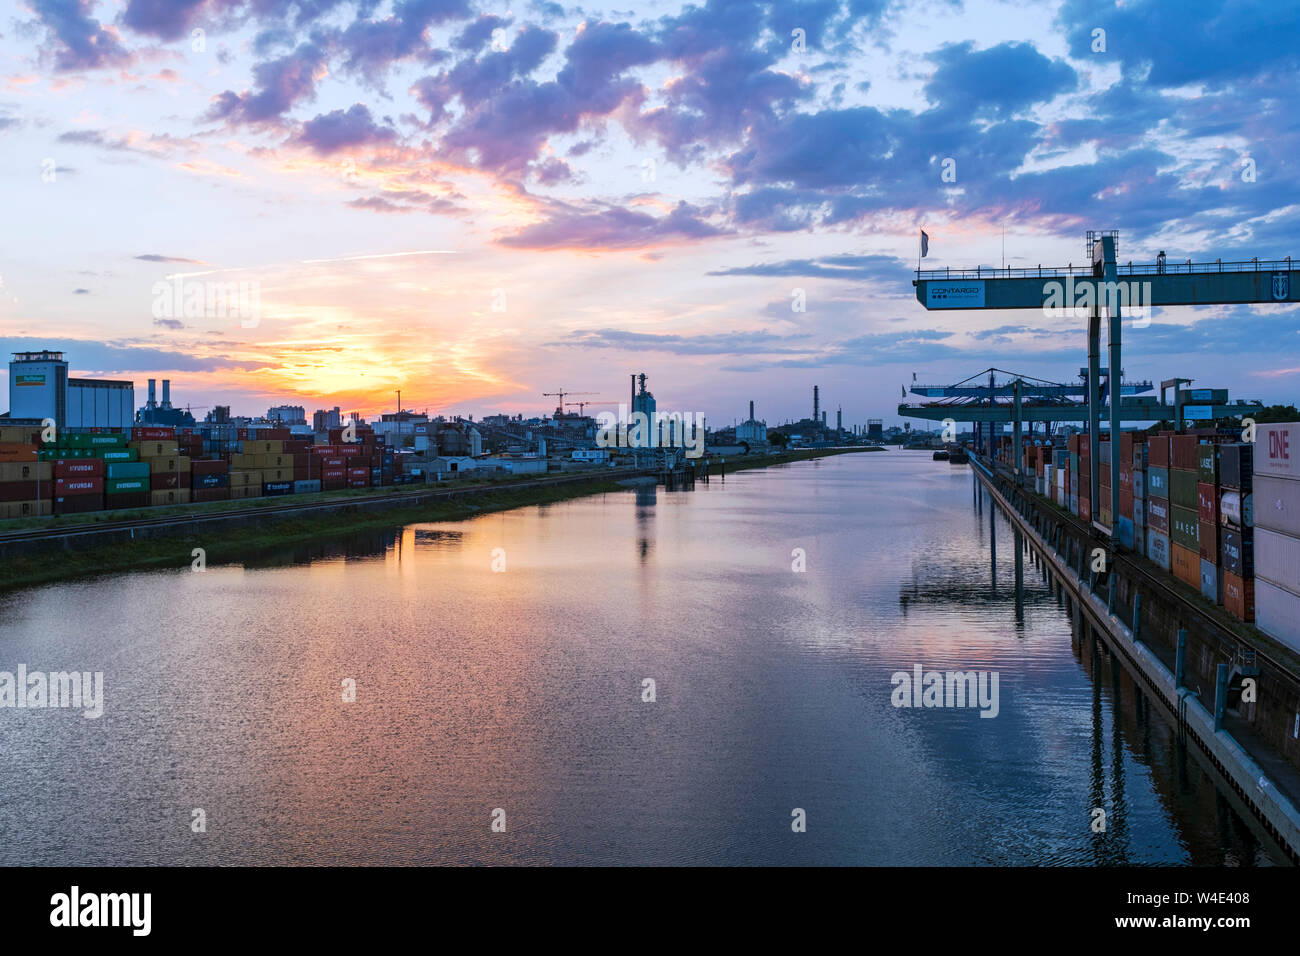 Rhein-Neckar-Hafen Mannheim (Mannheim Harbour) with Rhine river and BASF on the left Stock Photo